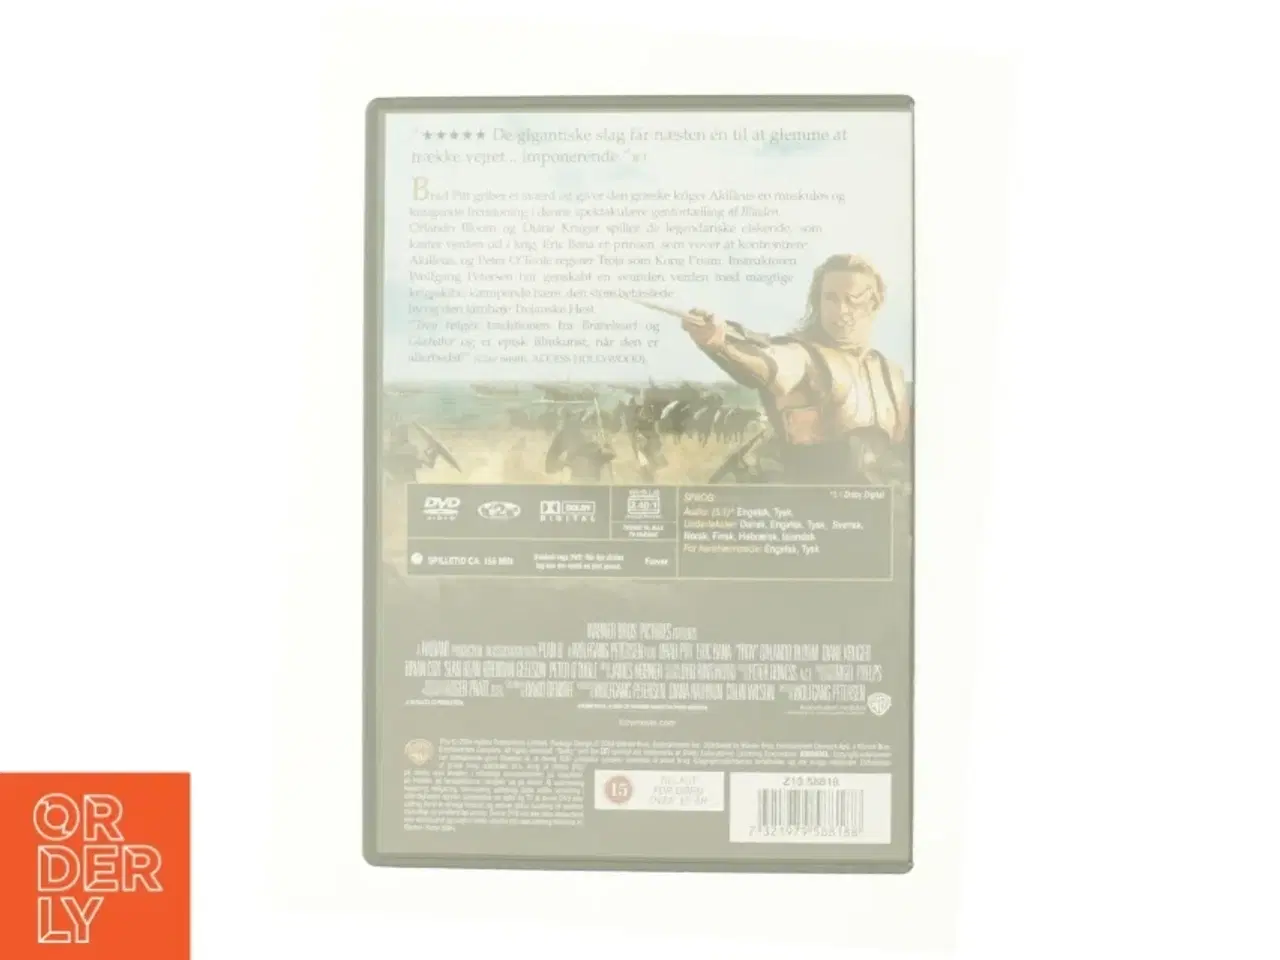 Billede 2 - Troja fra DVD